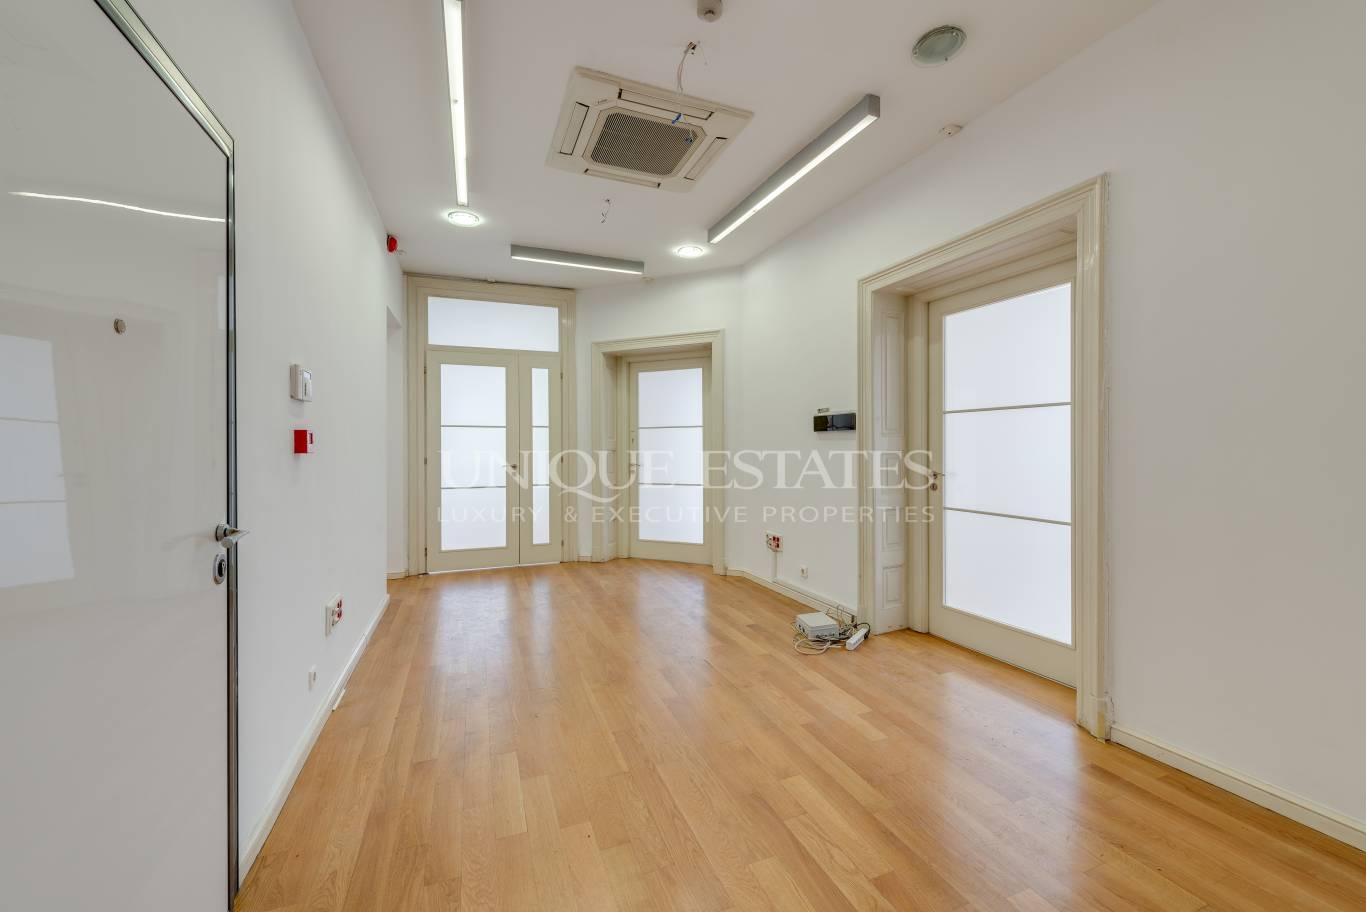 Office for rent in Sofia, Doktorska gradina with listing ID: K10950 - image 7